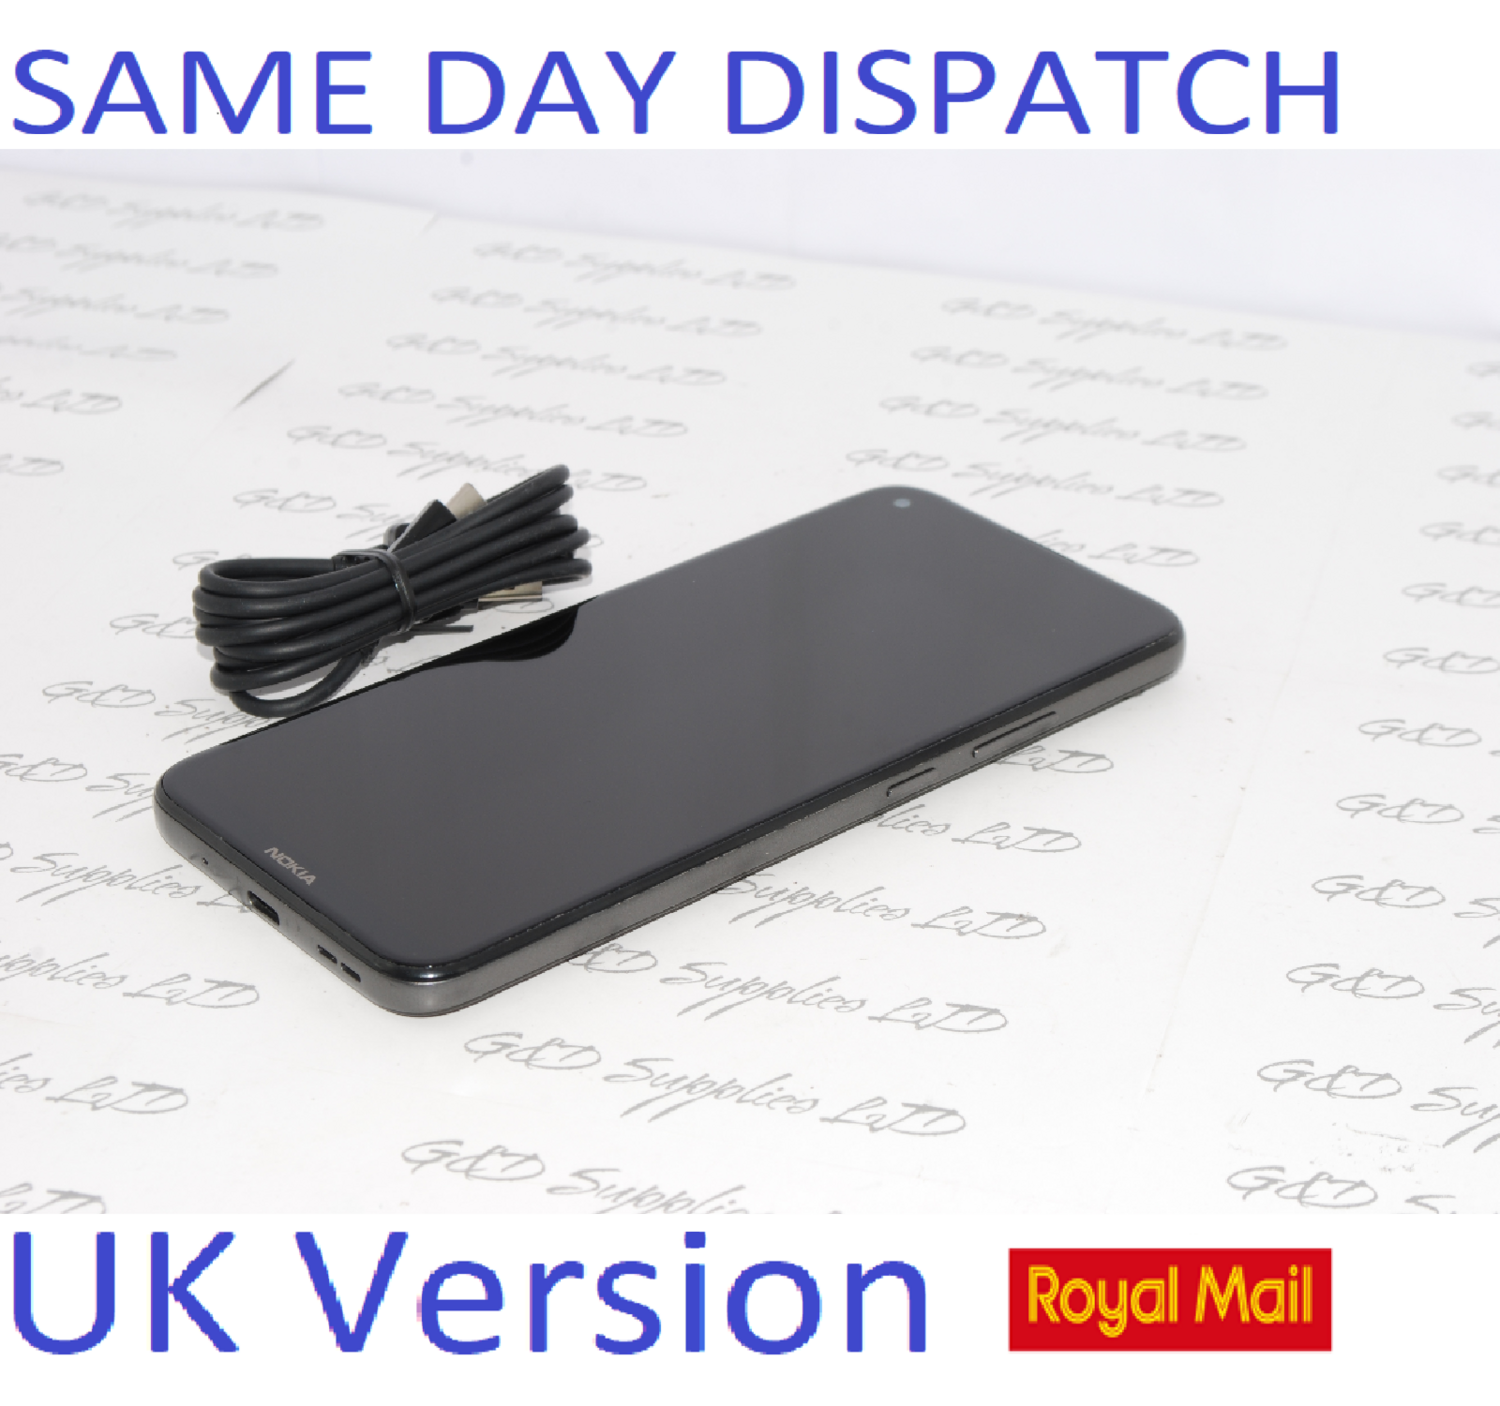 # Nokia 3.4 Smartphone 32GB Unlocked Dual-Sim  Grey UK version NO BOX